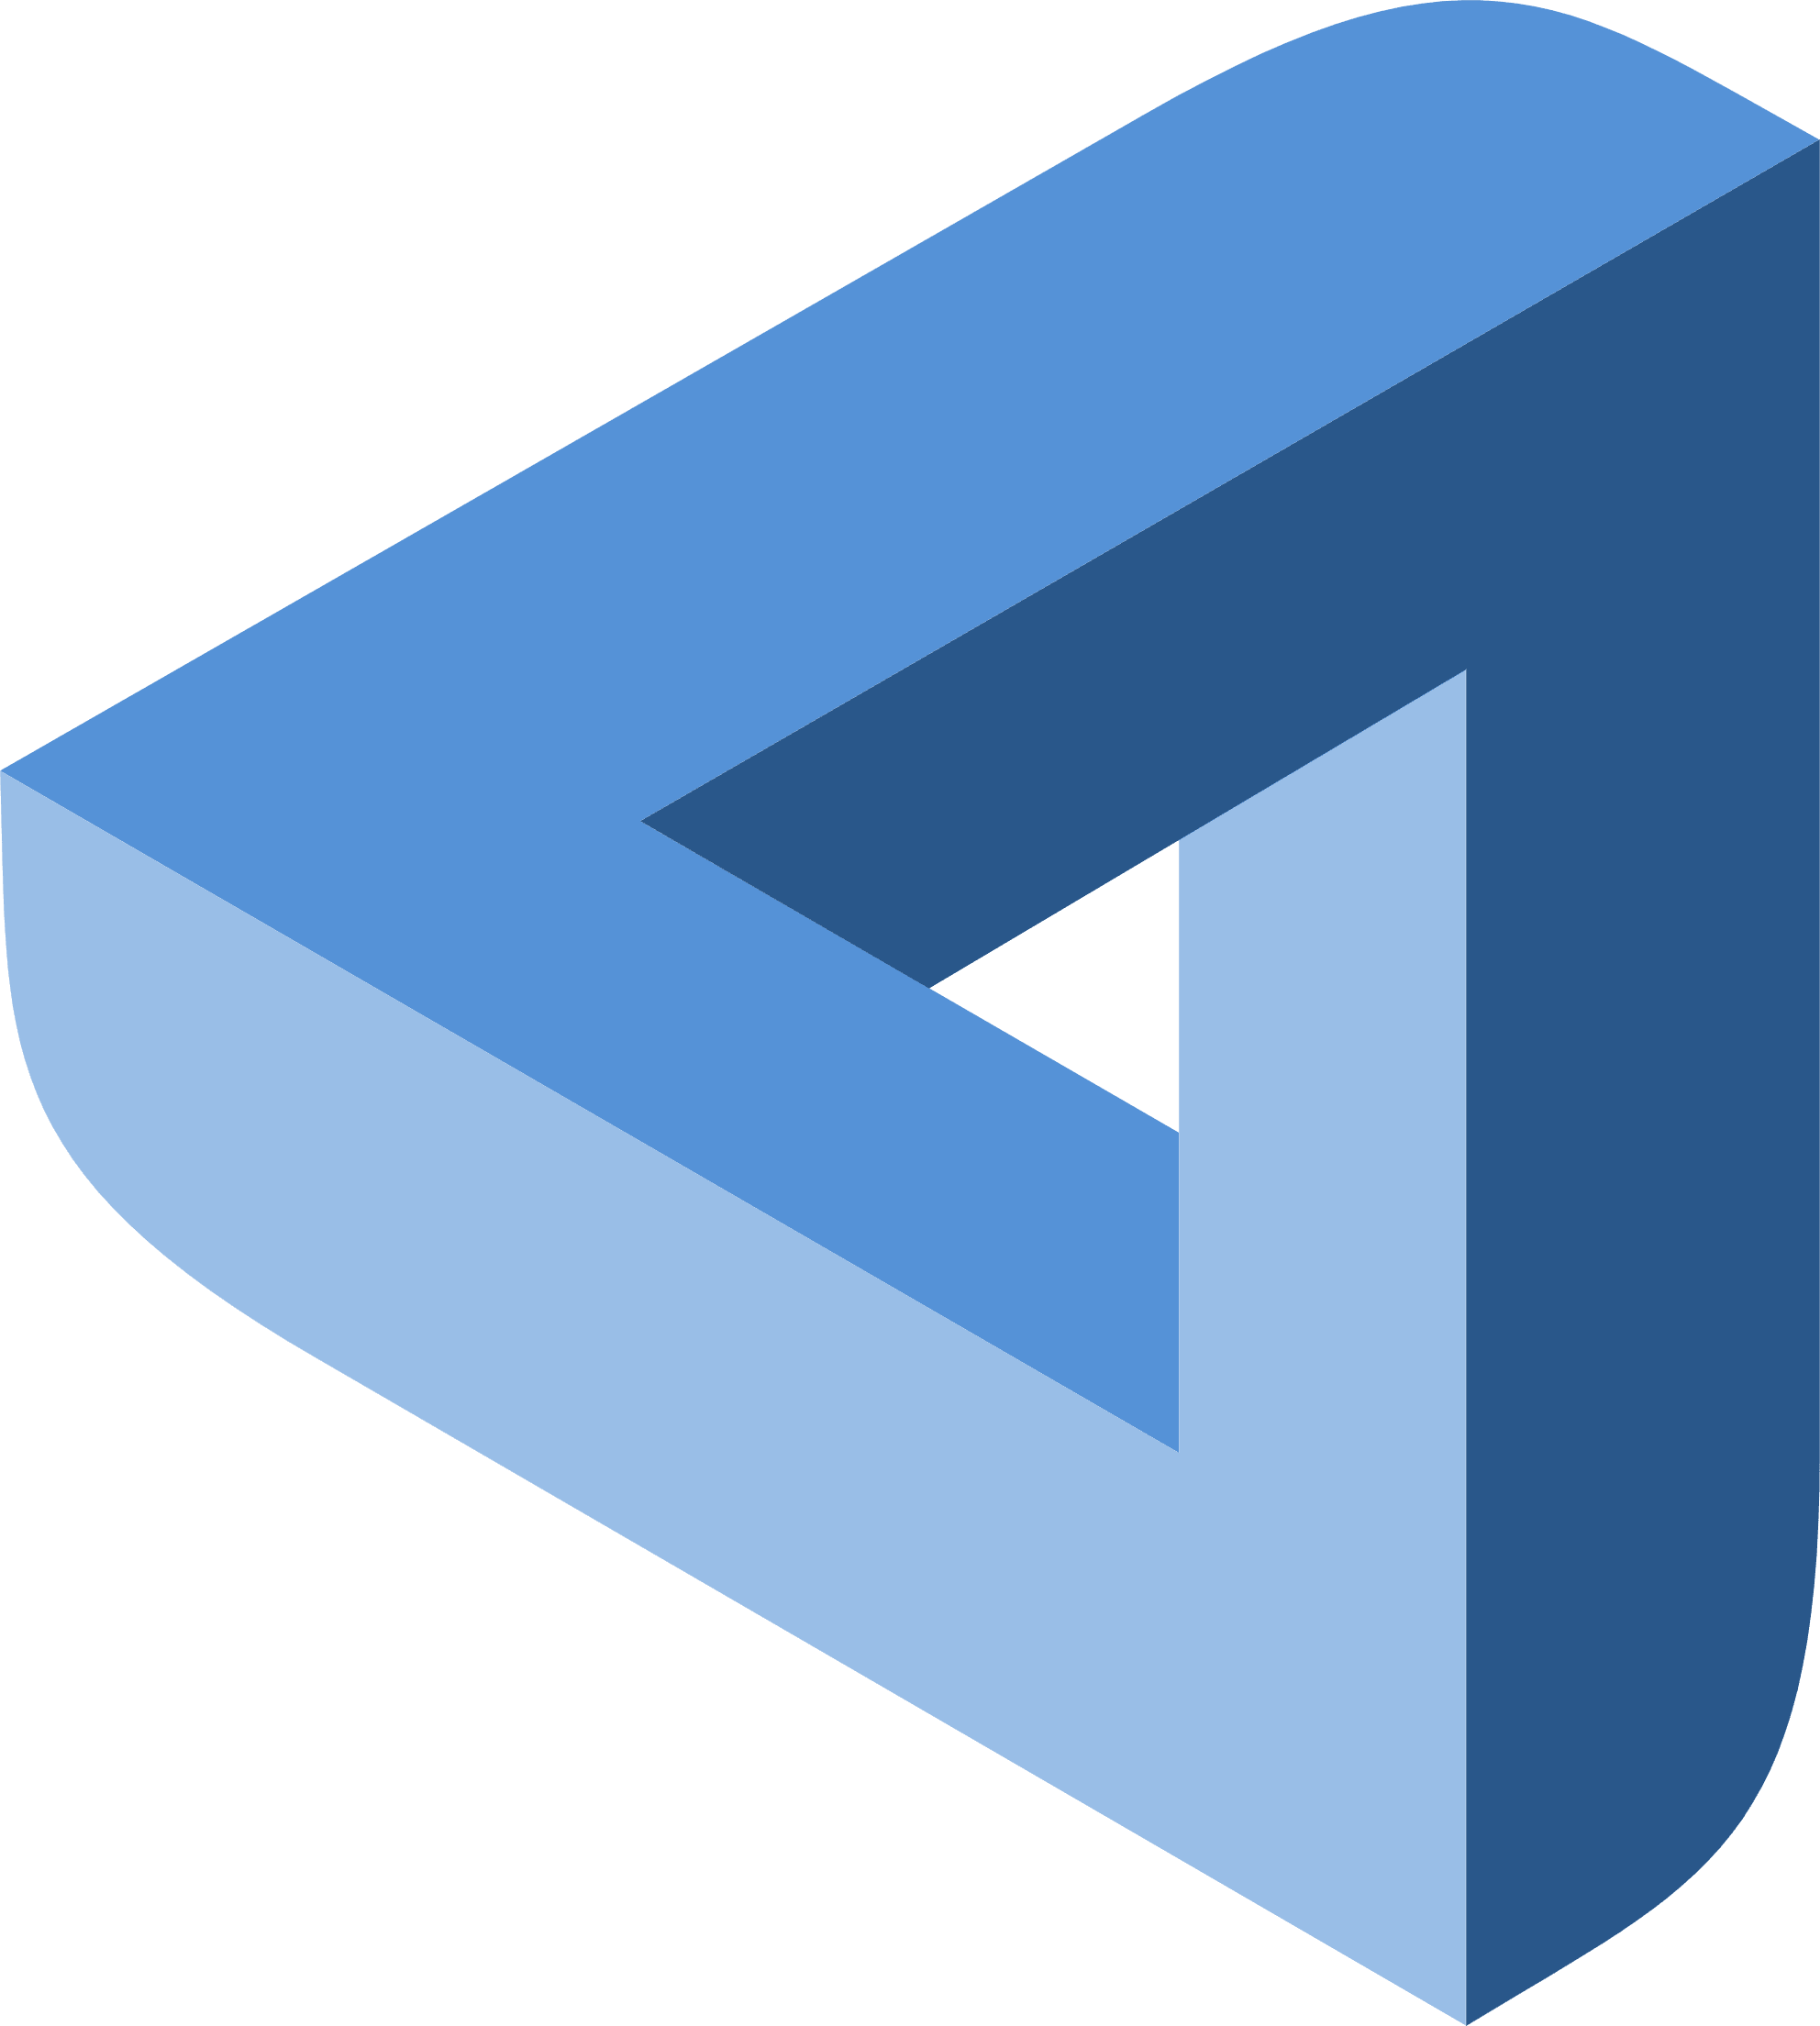 MaidSafeCoin logo in svg format